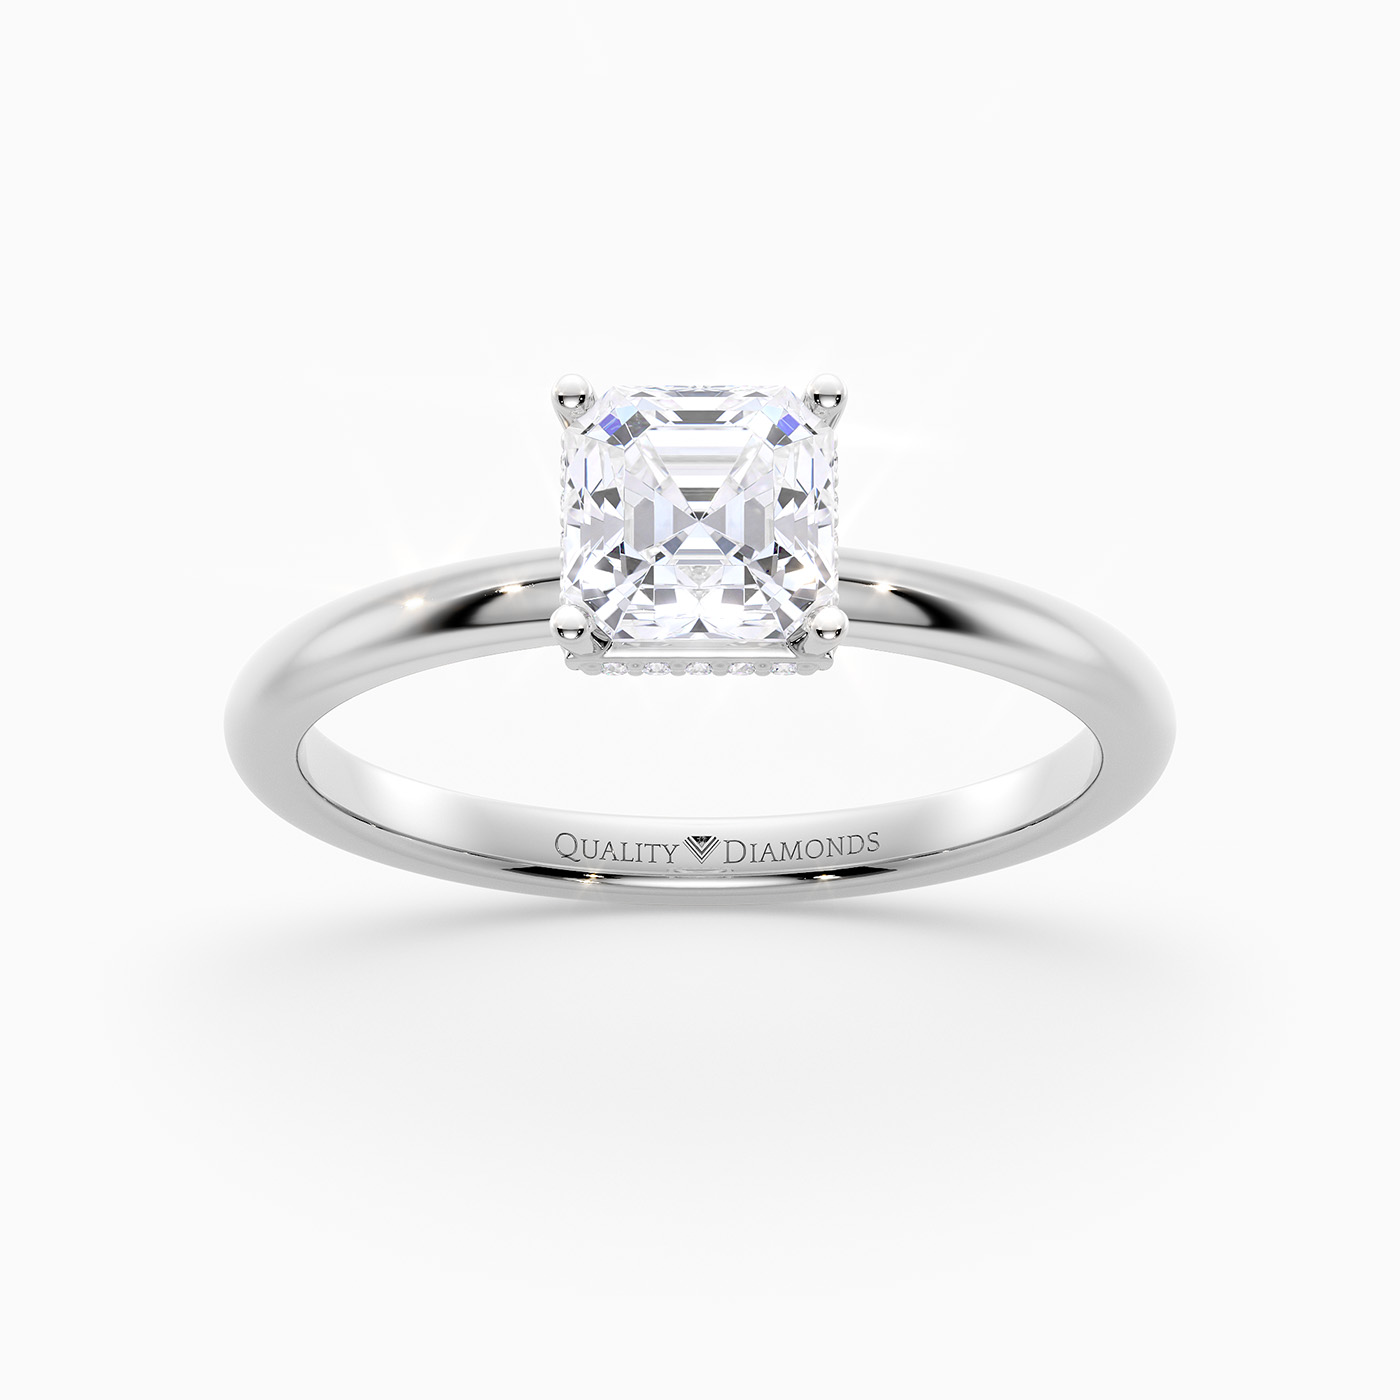 Asscher Liraz Hidden Halo Diamond Ring in Platinum 950